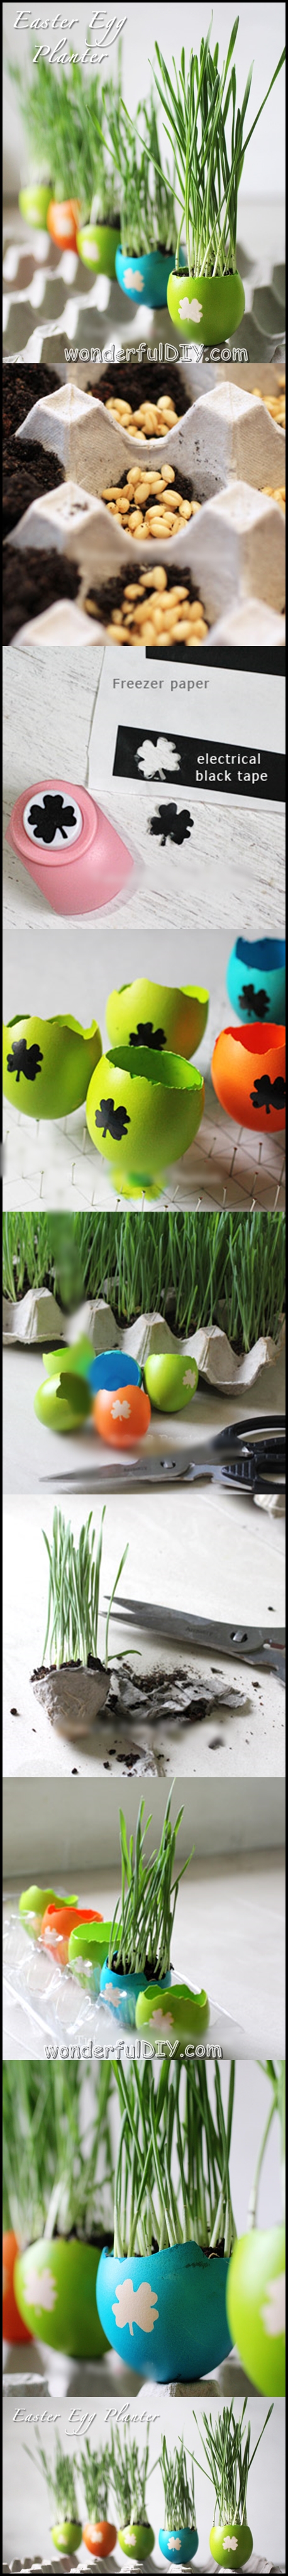 DIY Easter Egg Planters m.w